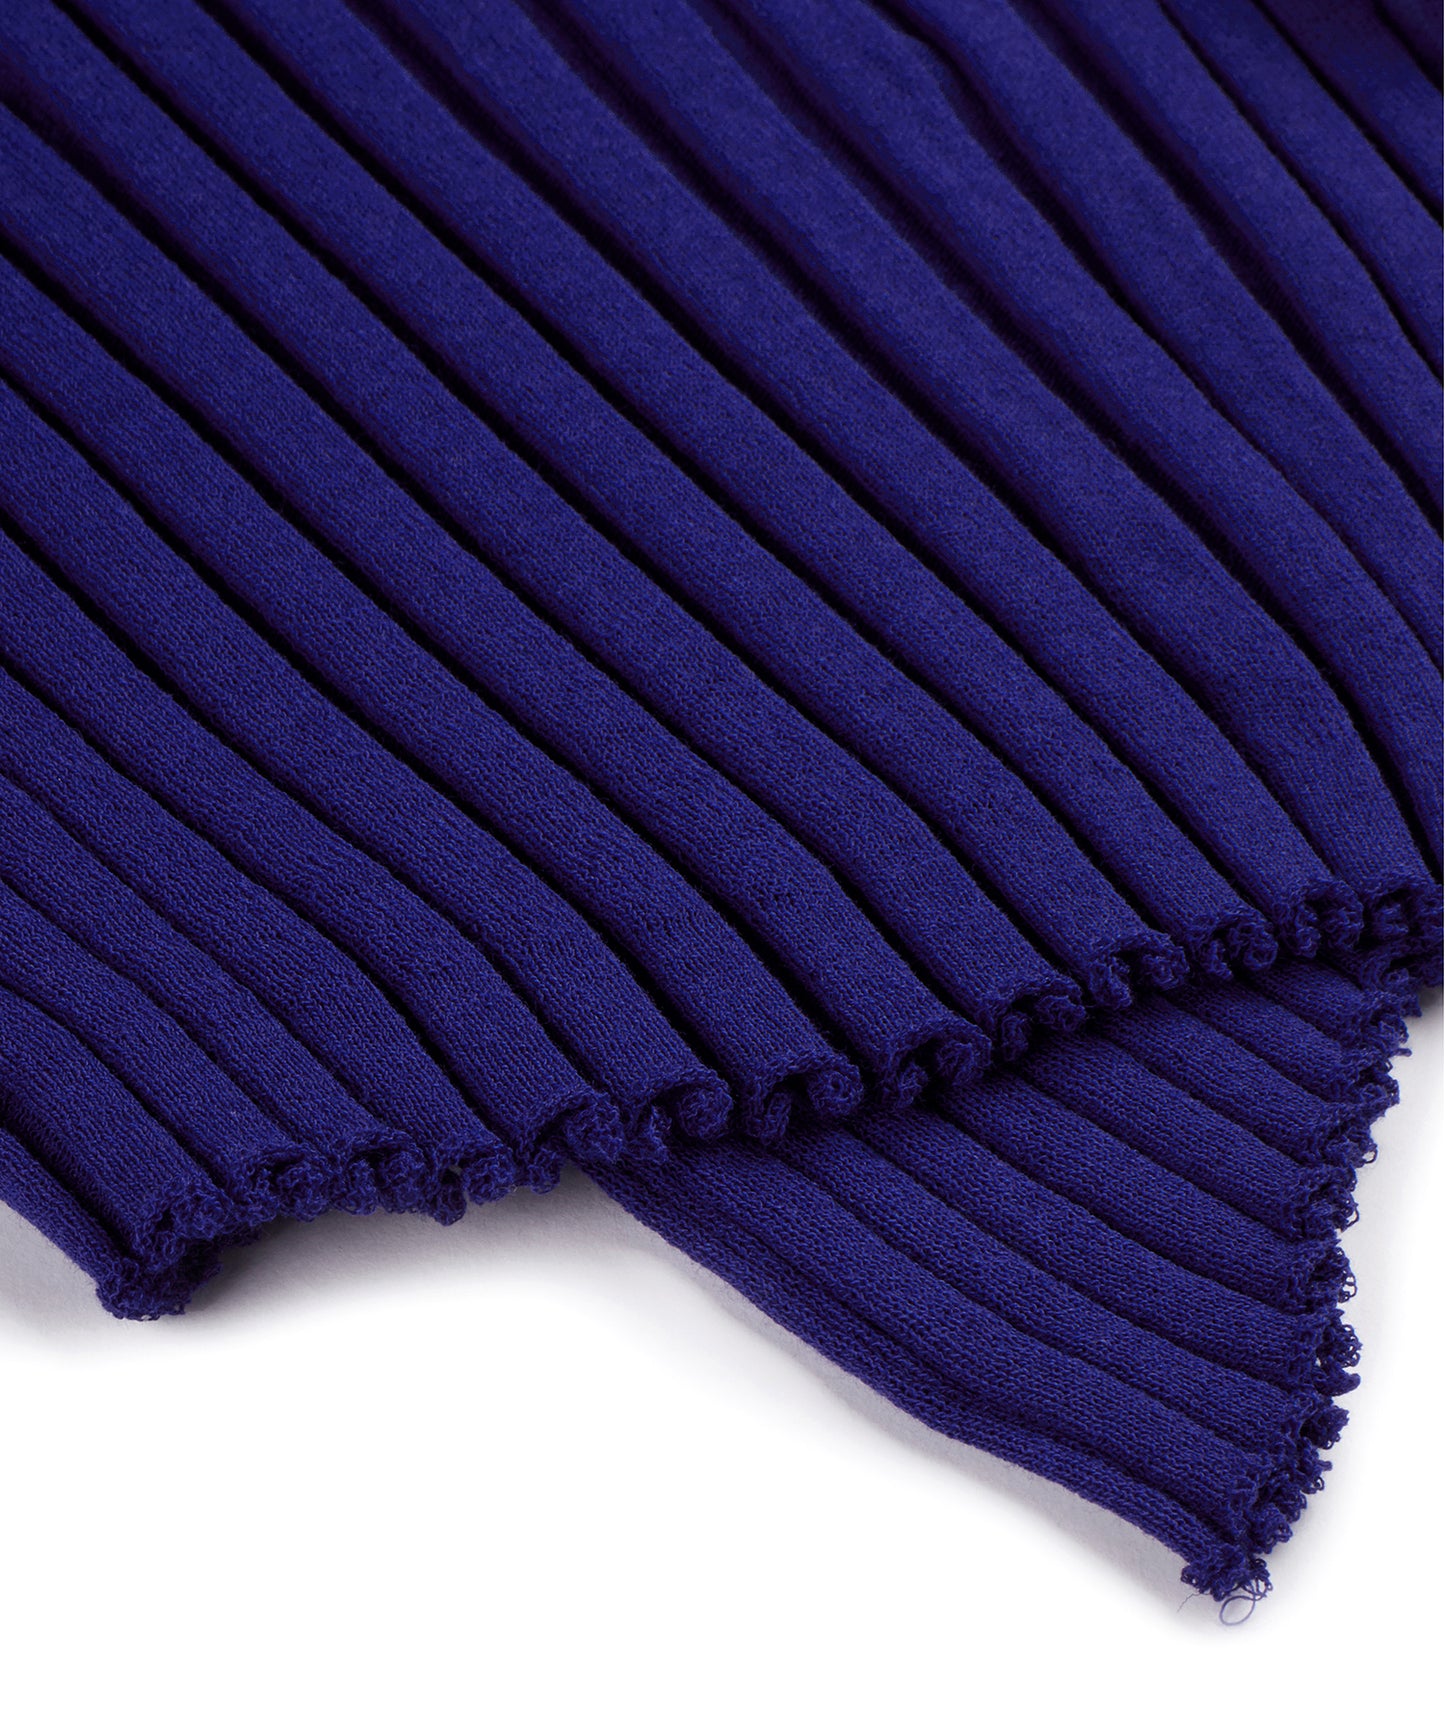 Pit Striped Cotton-blend Sweater